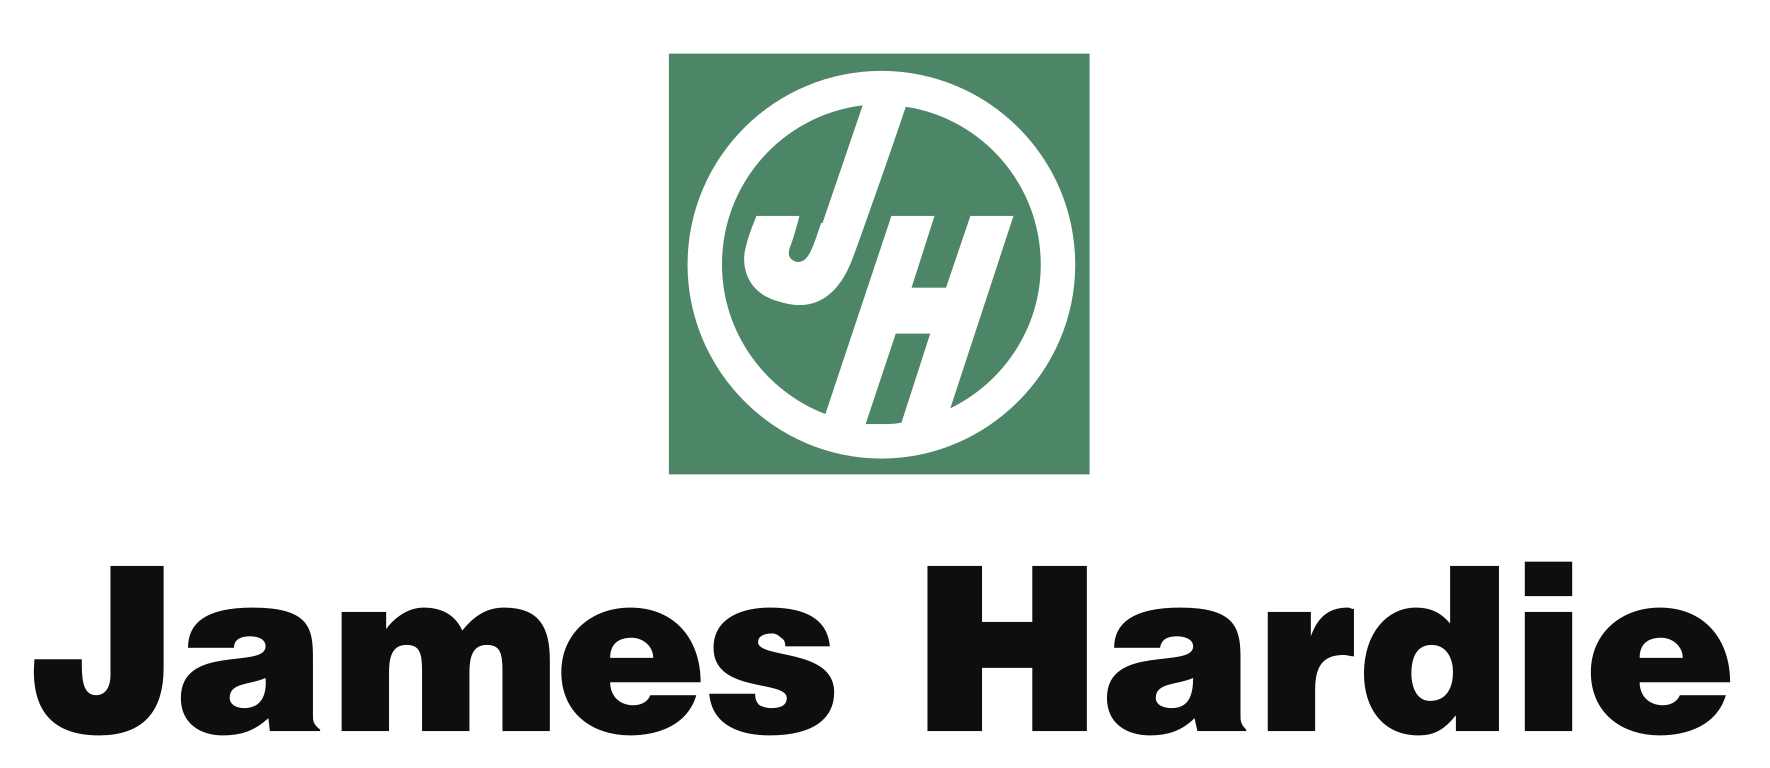 james-hardie-1-logo-png-transparent